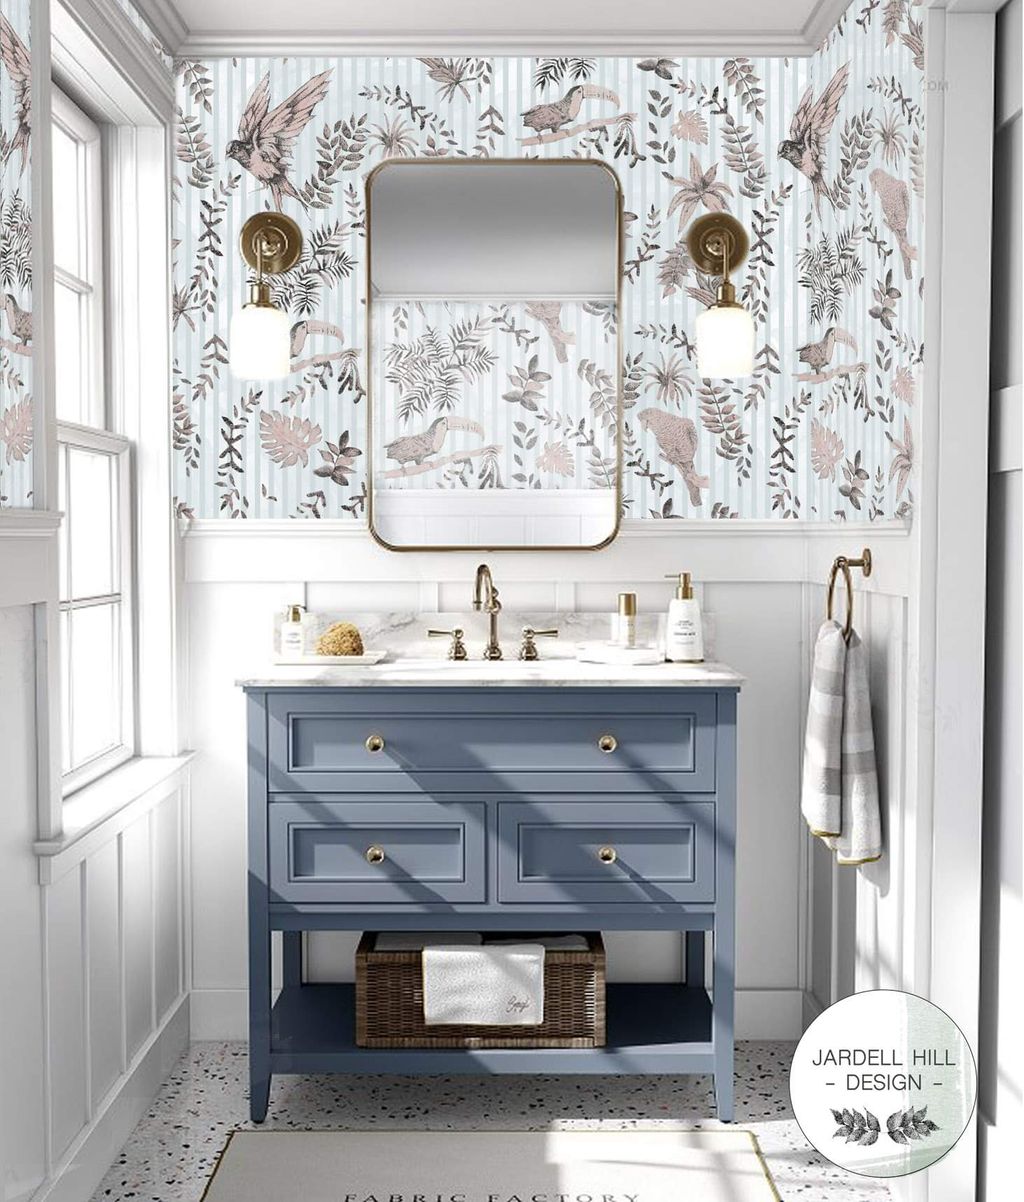 32 wallpaper ideas – beautiful designs and inspiring motifs for homes ...